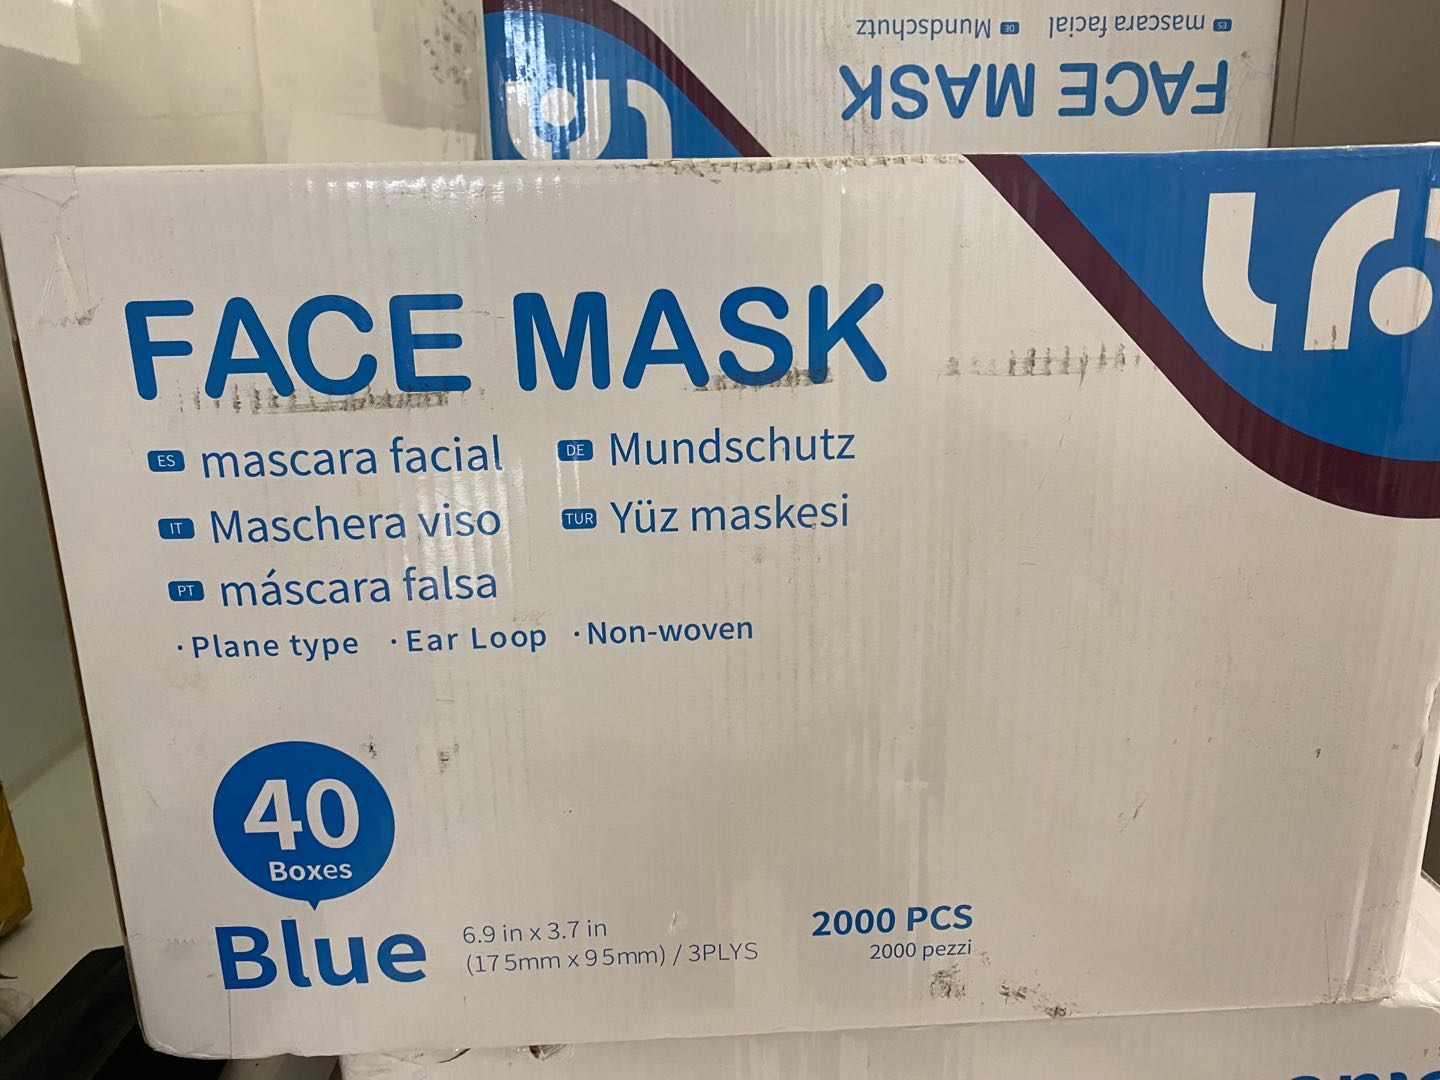 lyncmed CE FDA ceritficated mask surgical mask EN14683 Type IIR medical mask